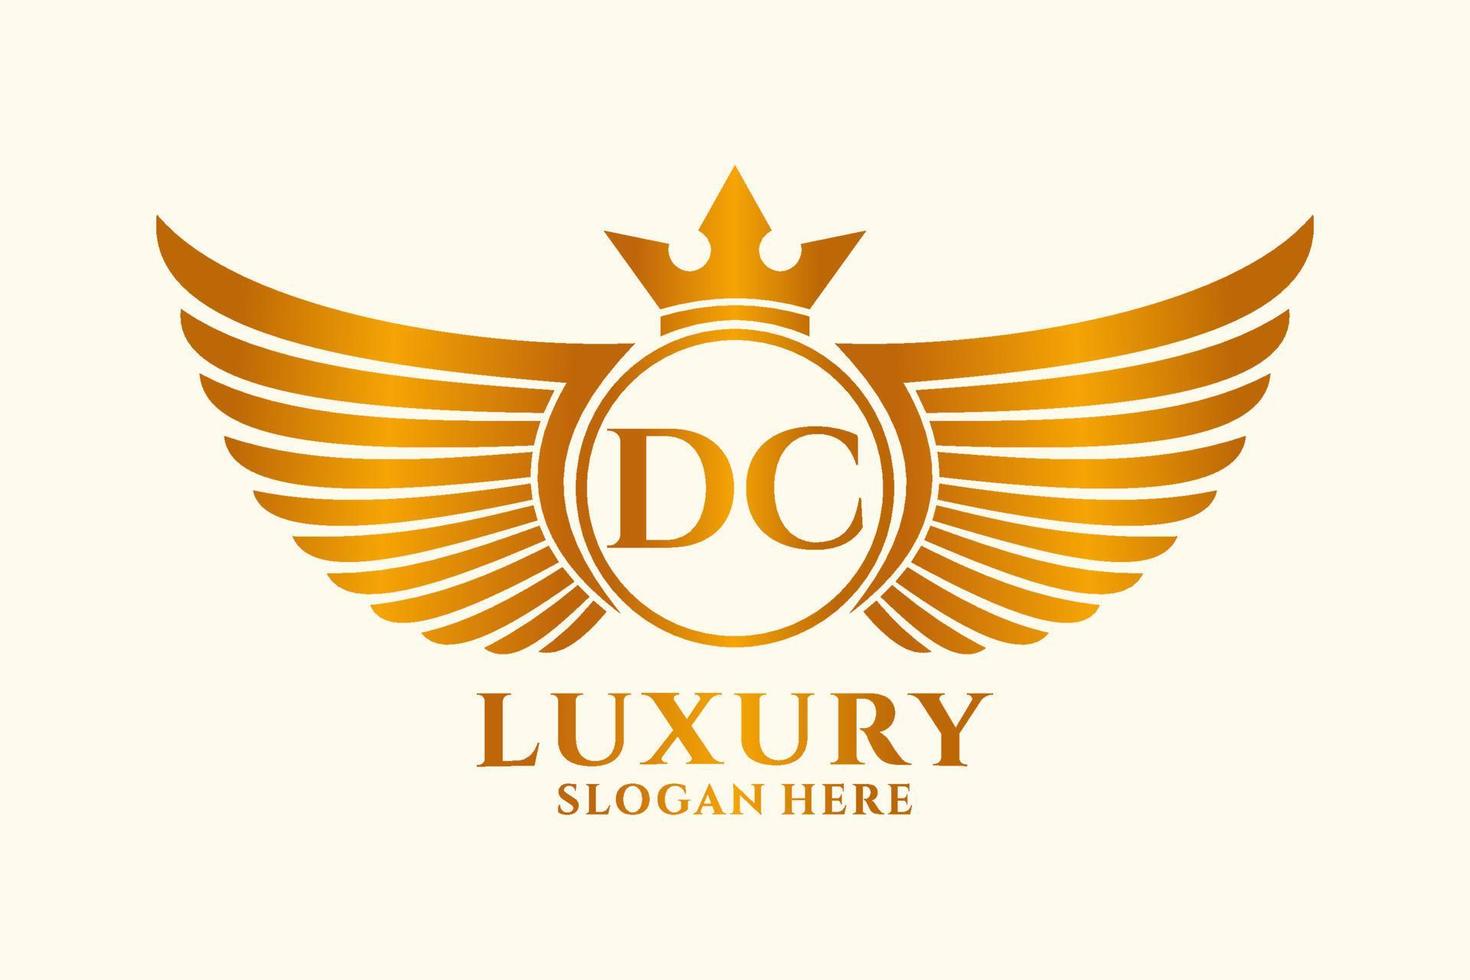 luxe Koninklijk vleugel brief dc kam goud kleur logo vector, zege logo, kam logo, vleugel logo, vector logo sjabloon.